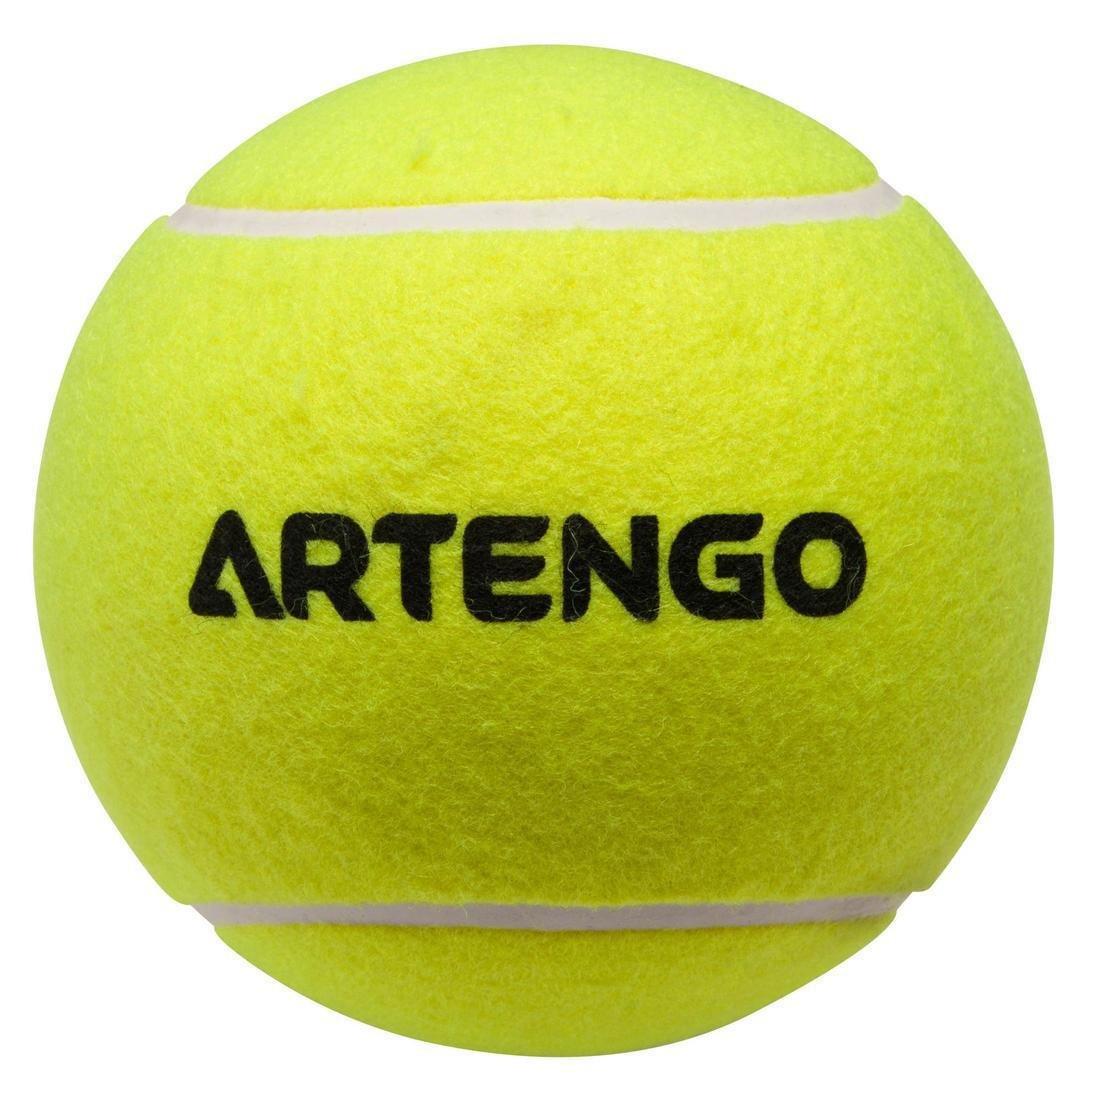 ARTENGO - Jumbo Tennis Ball, Yellow